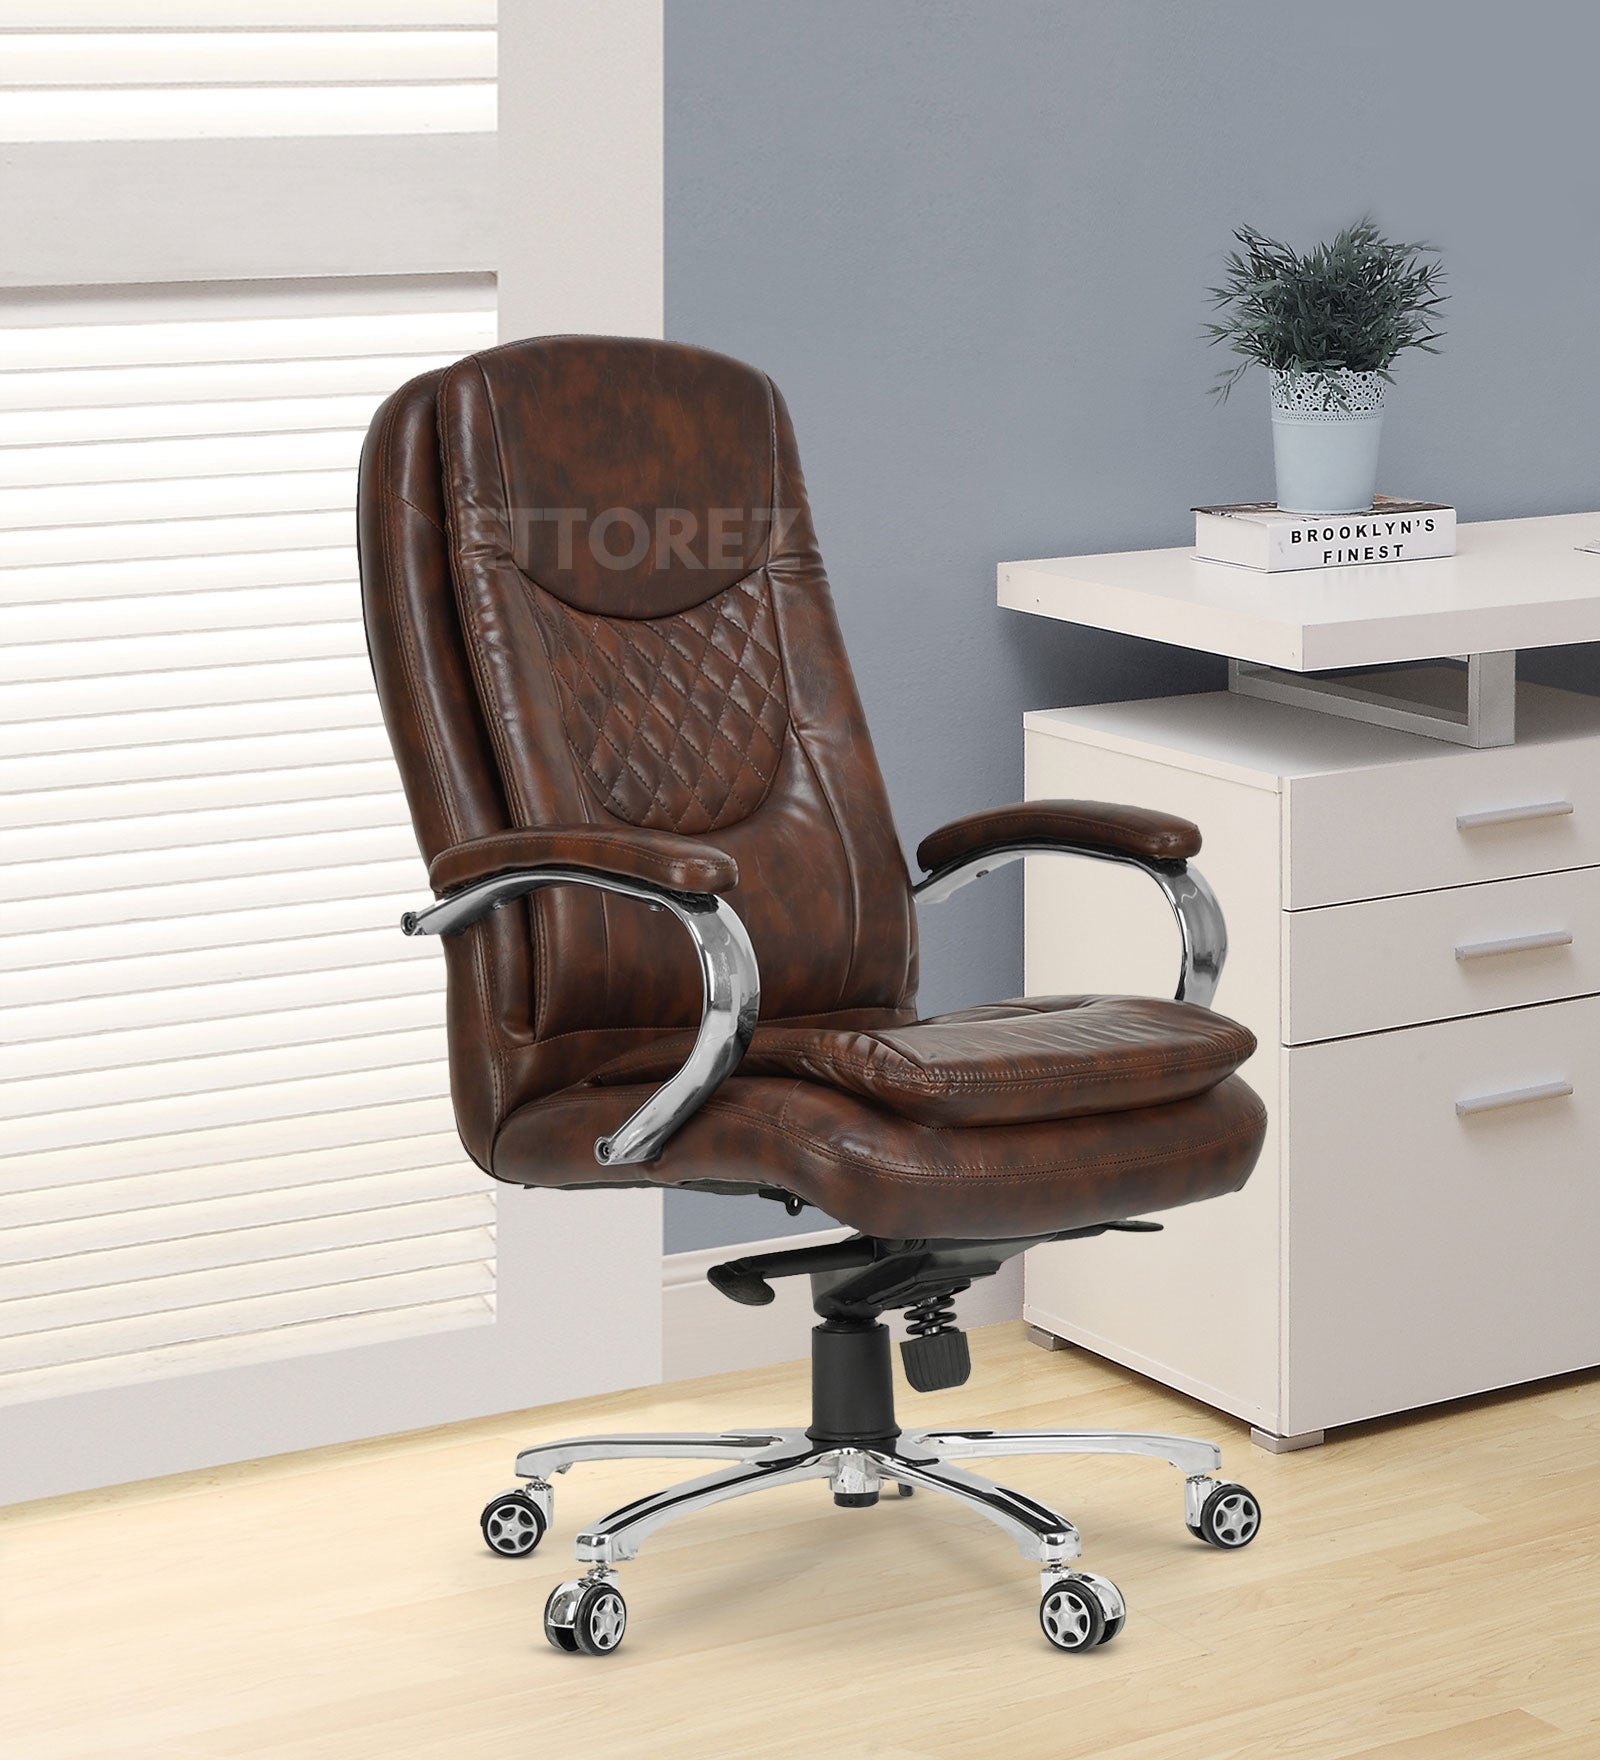 Ettorez JUMBO Premium High Back Leatherette Office Chair